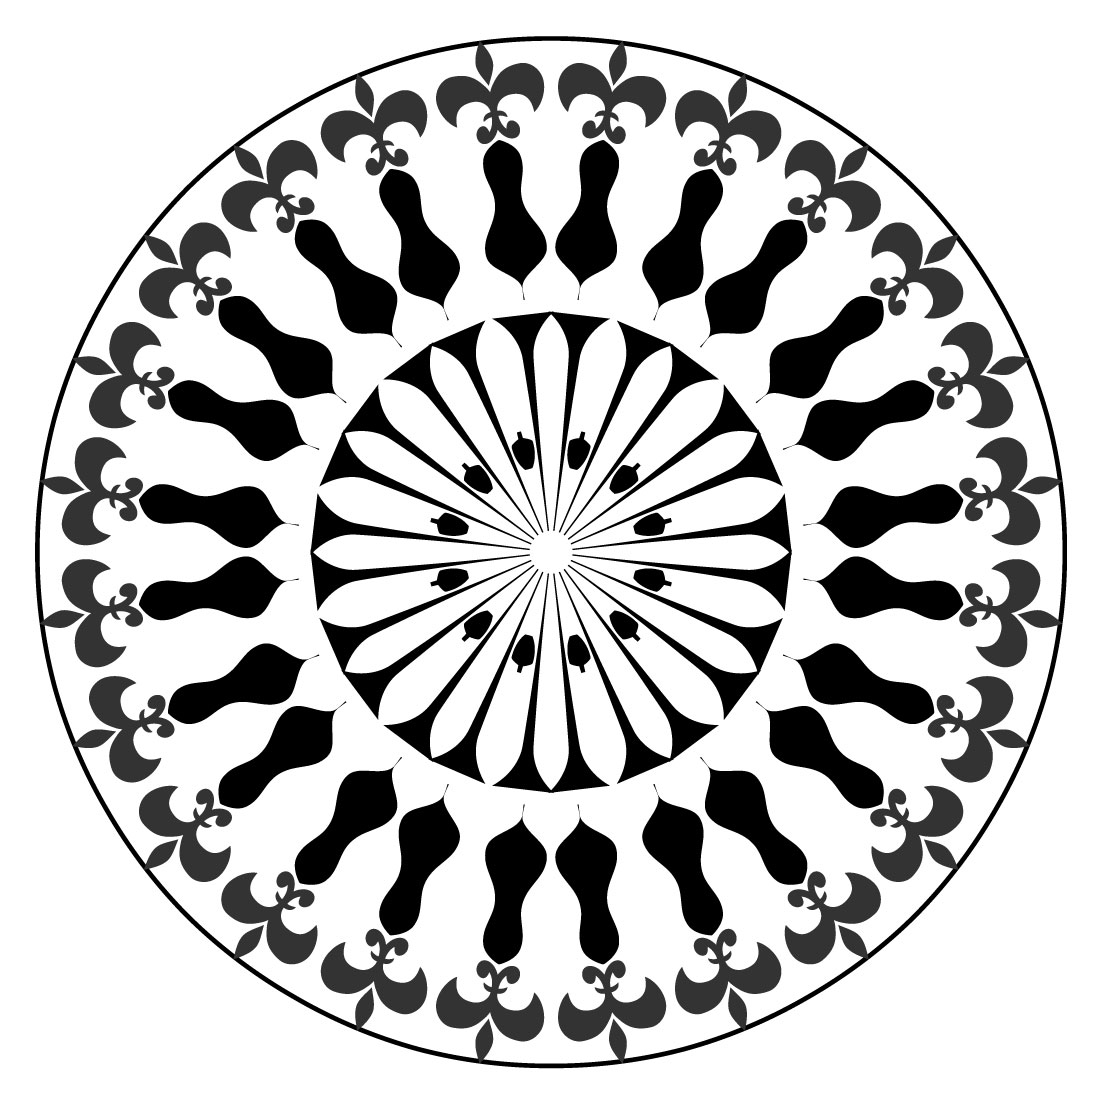 Mandala-Art-with-black-and-white-shades cover image.